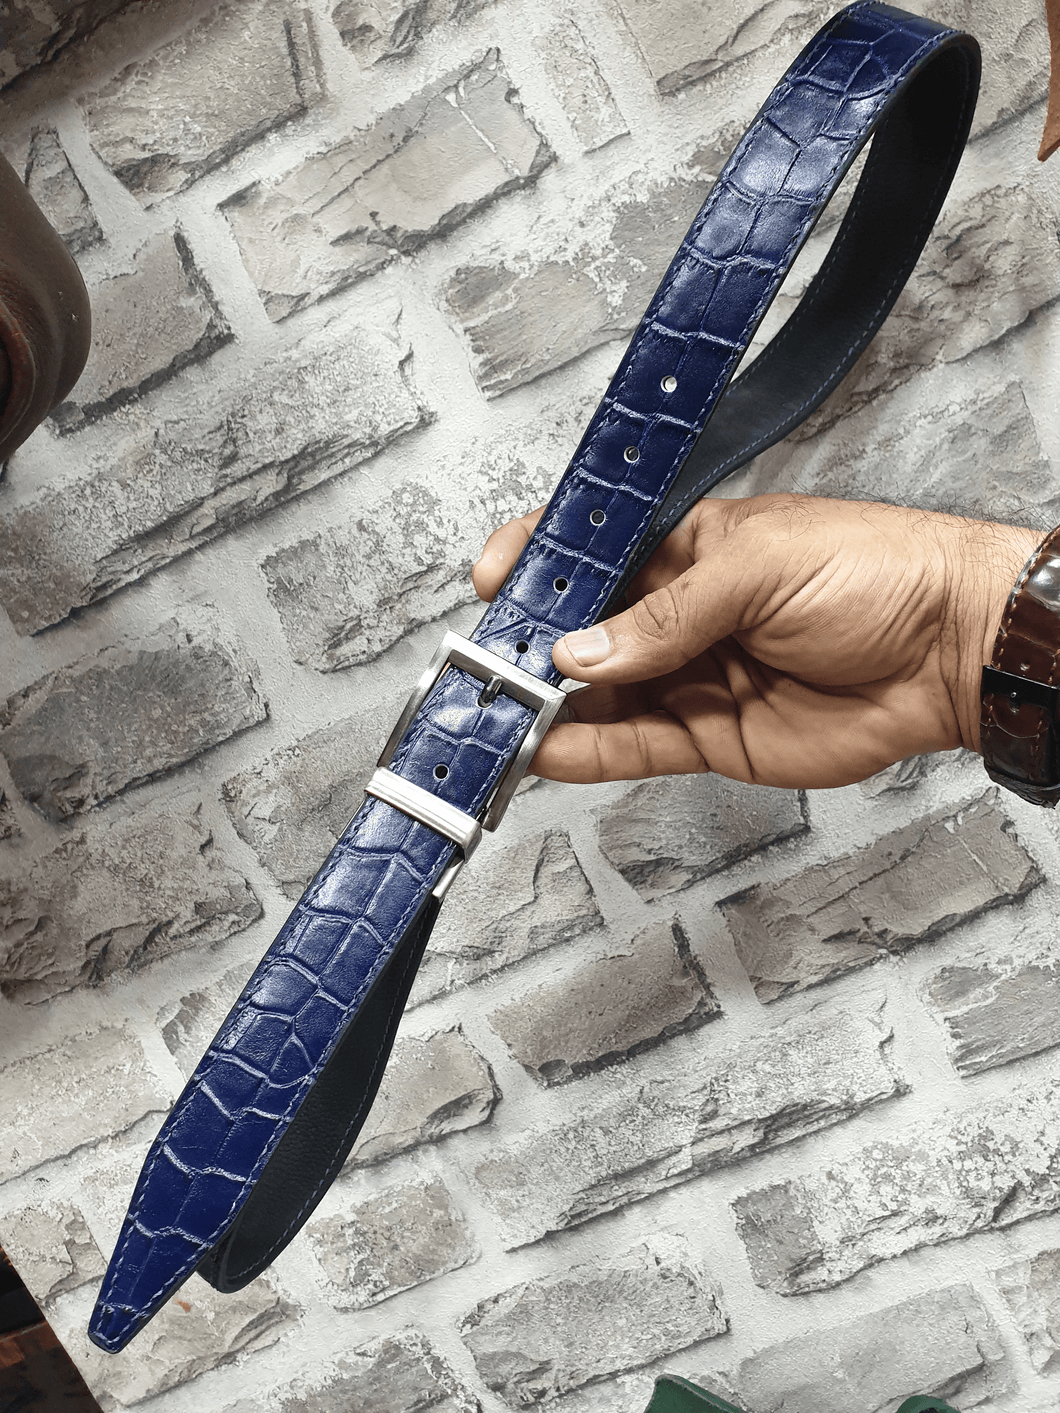 Indianleathercraft 28 - 32 inches Handmade Blue leather belt